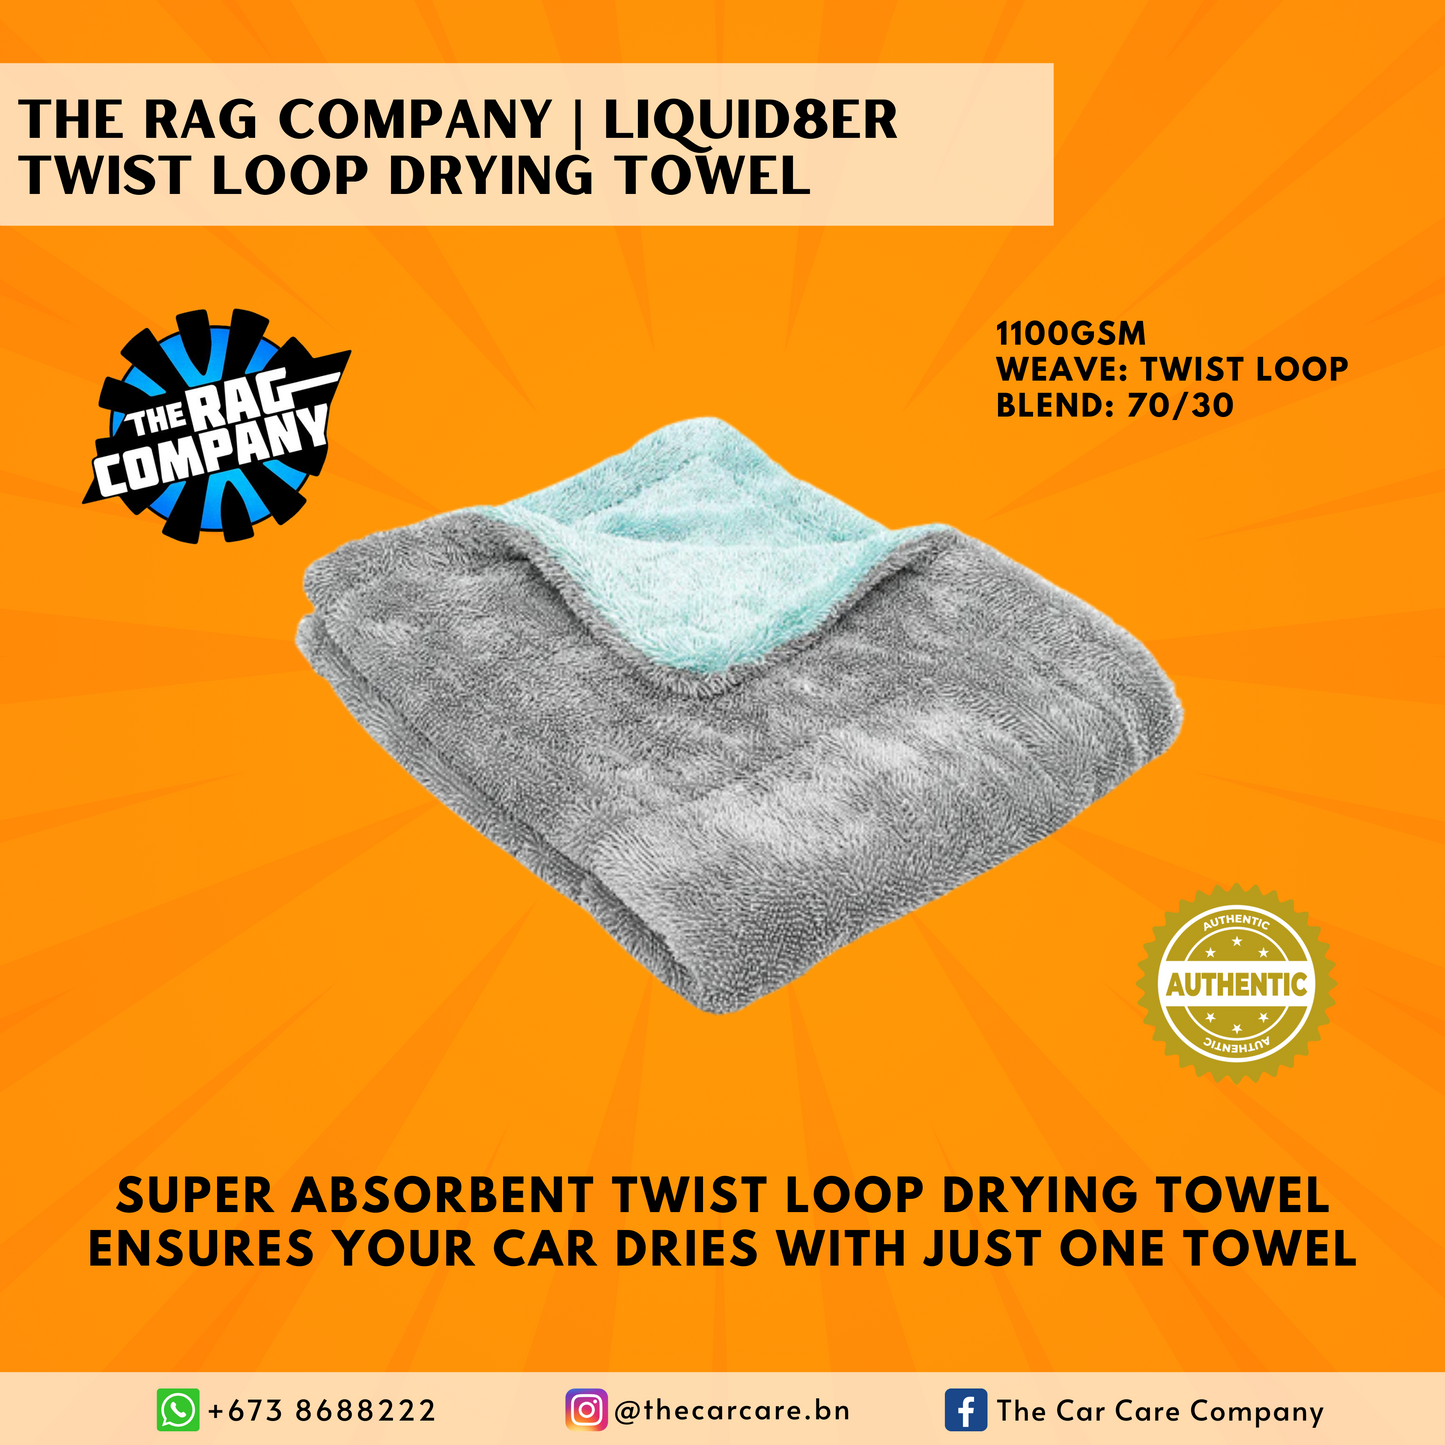 Liquid8r Twist Loop Drying Towel – The Car Care Company